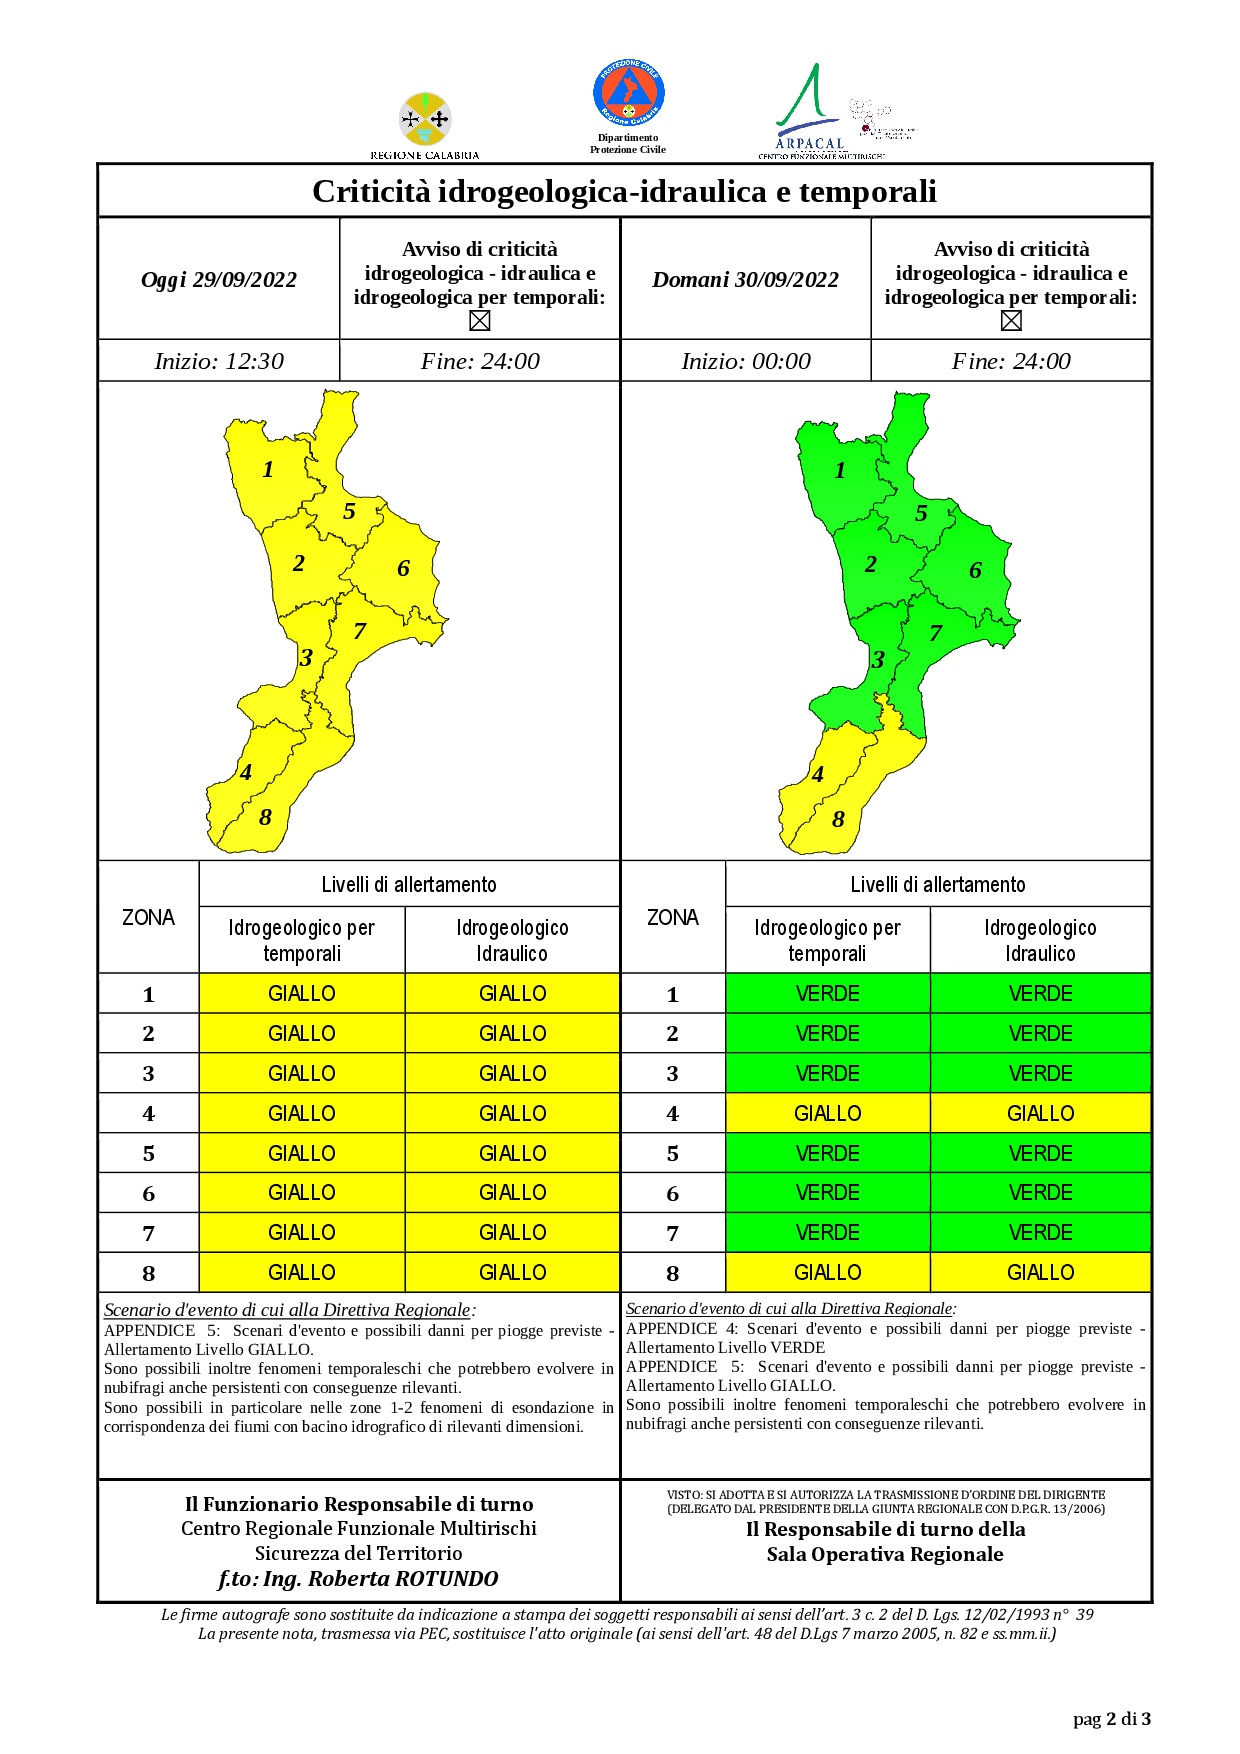 Criticità idrogeologica-idraulica e temporali in Calabria 29-09-2022